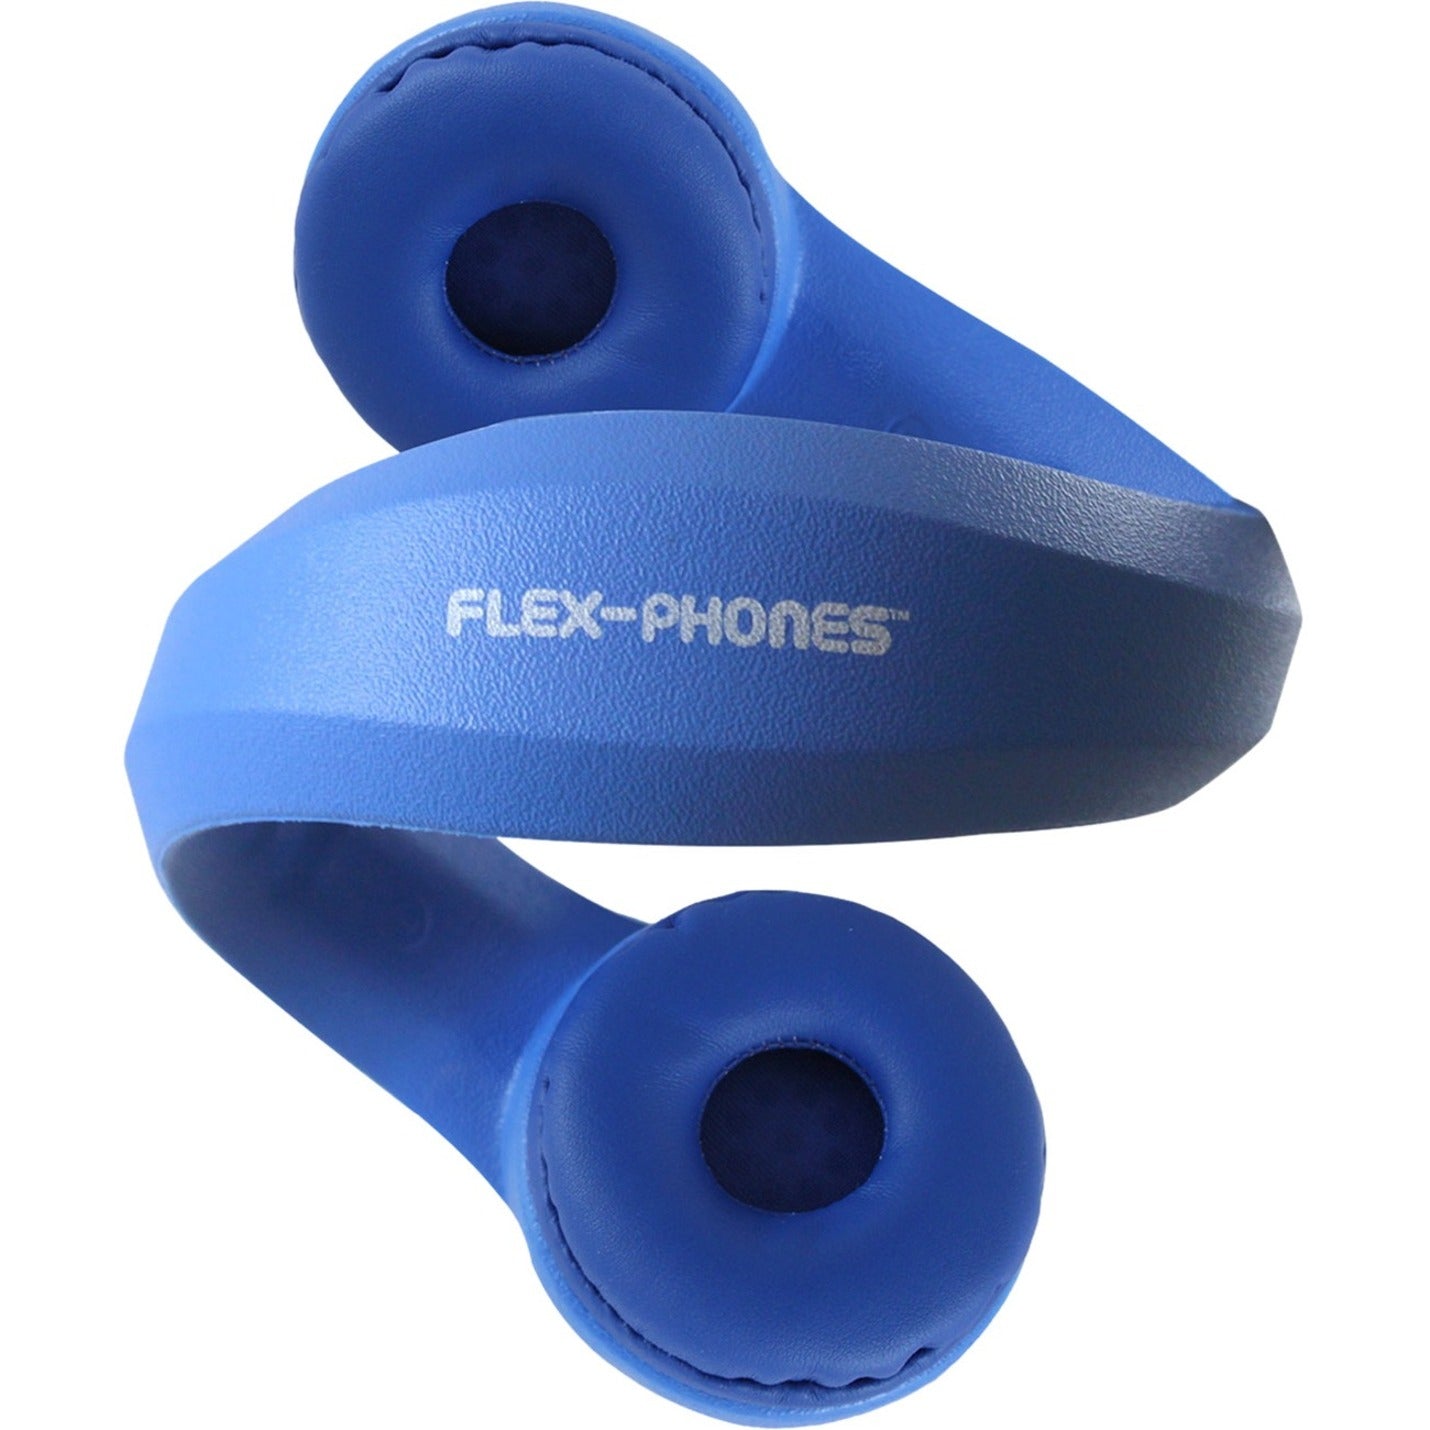 Hamilton Buhl KFX2U-BLU Kid's Flex-Phones USB Headset With Gooseneck Microphone, Blue - Comfortable, Flexible, Noise Cancelling